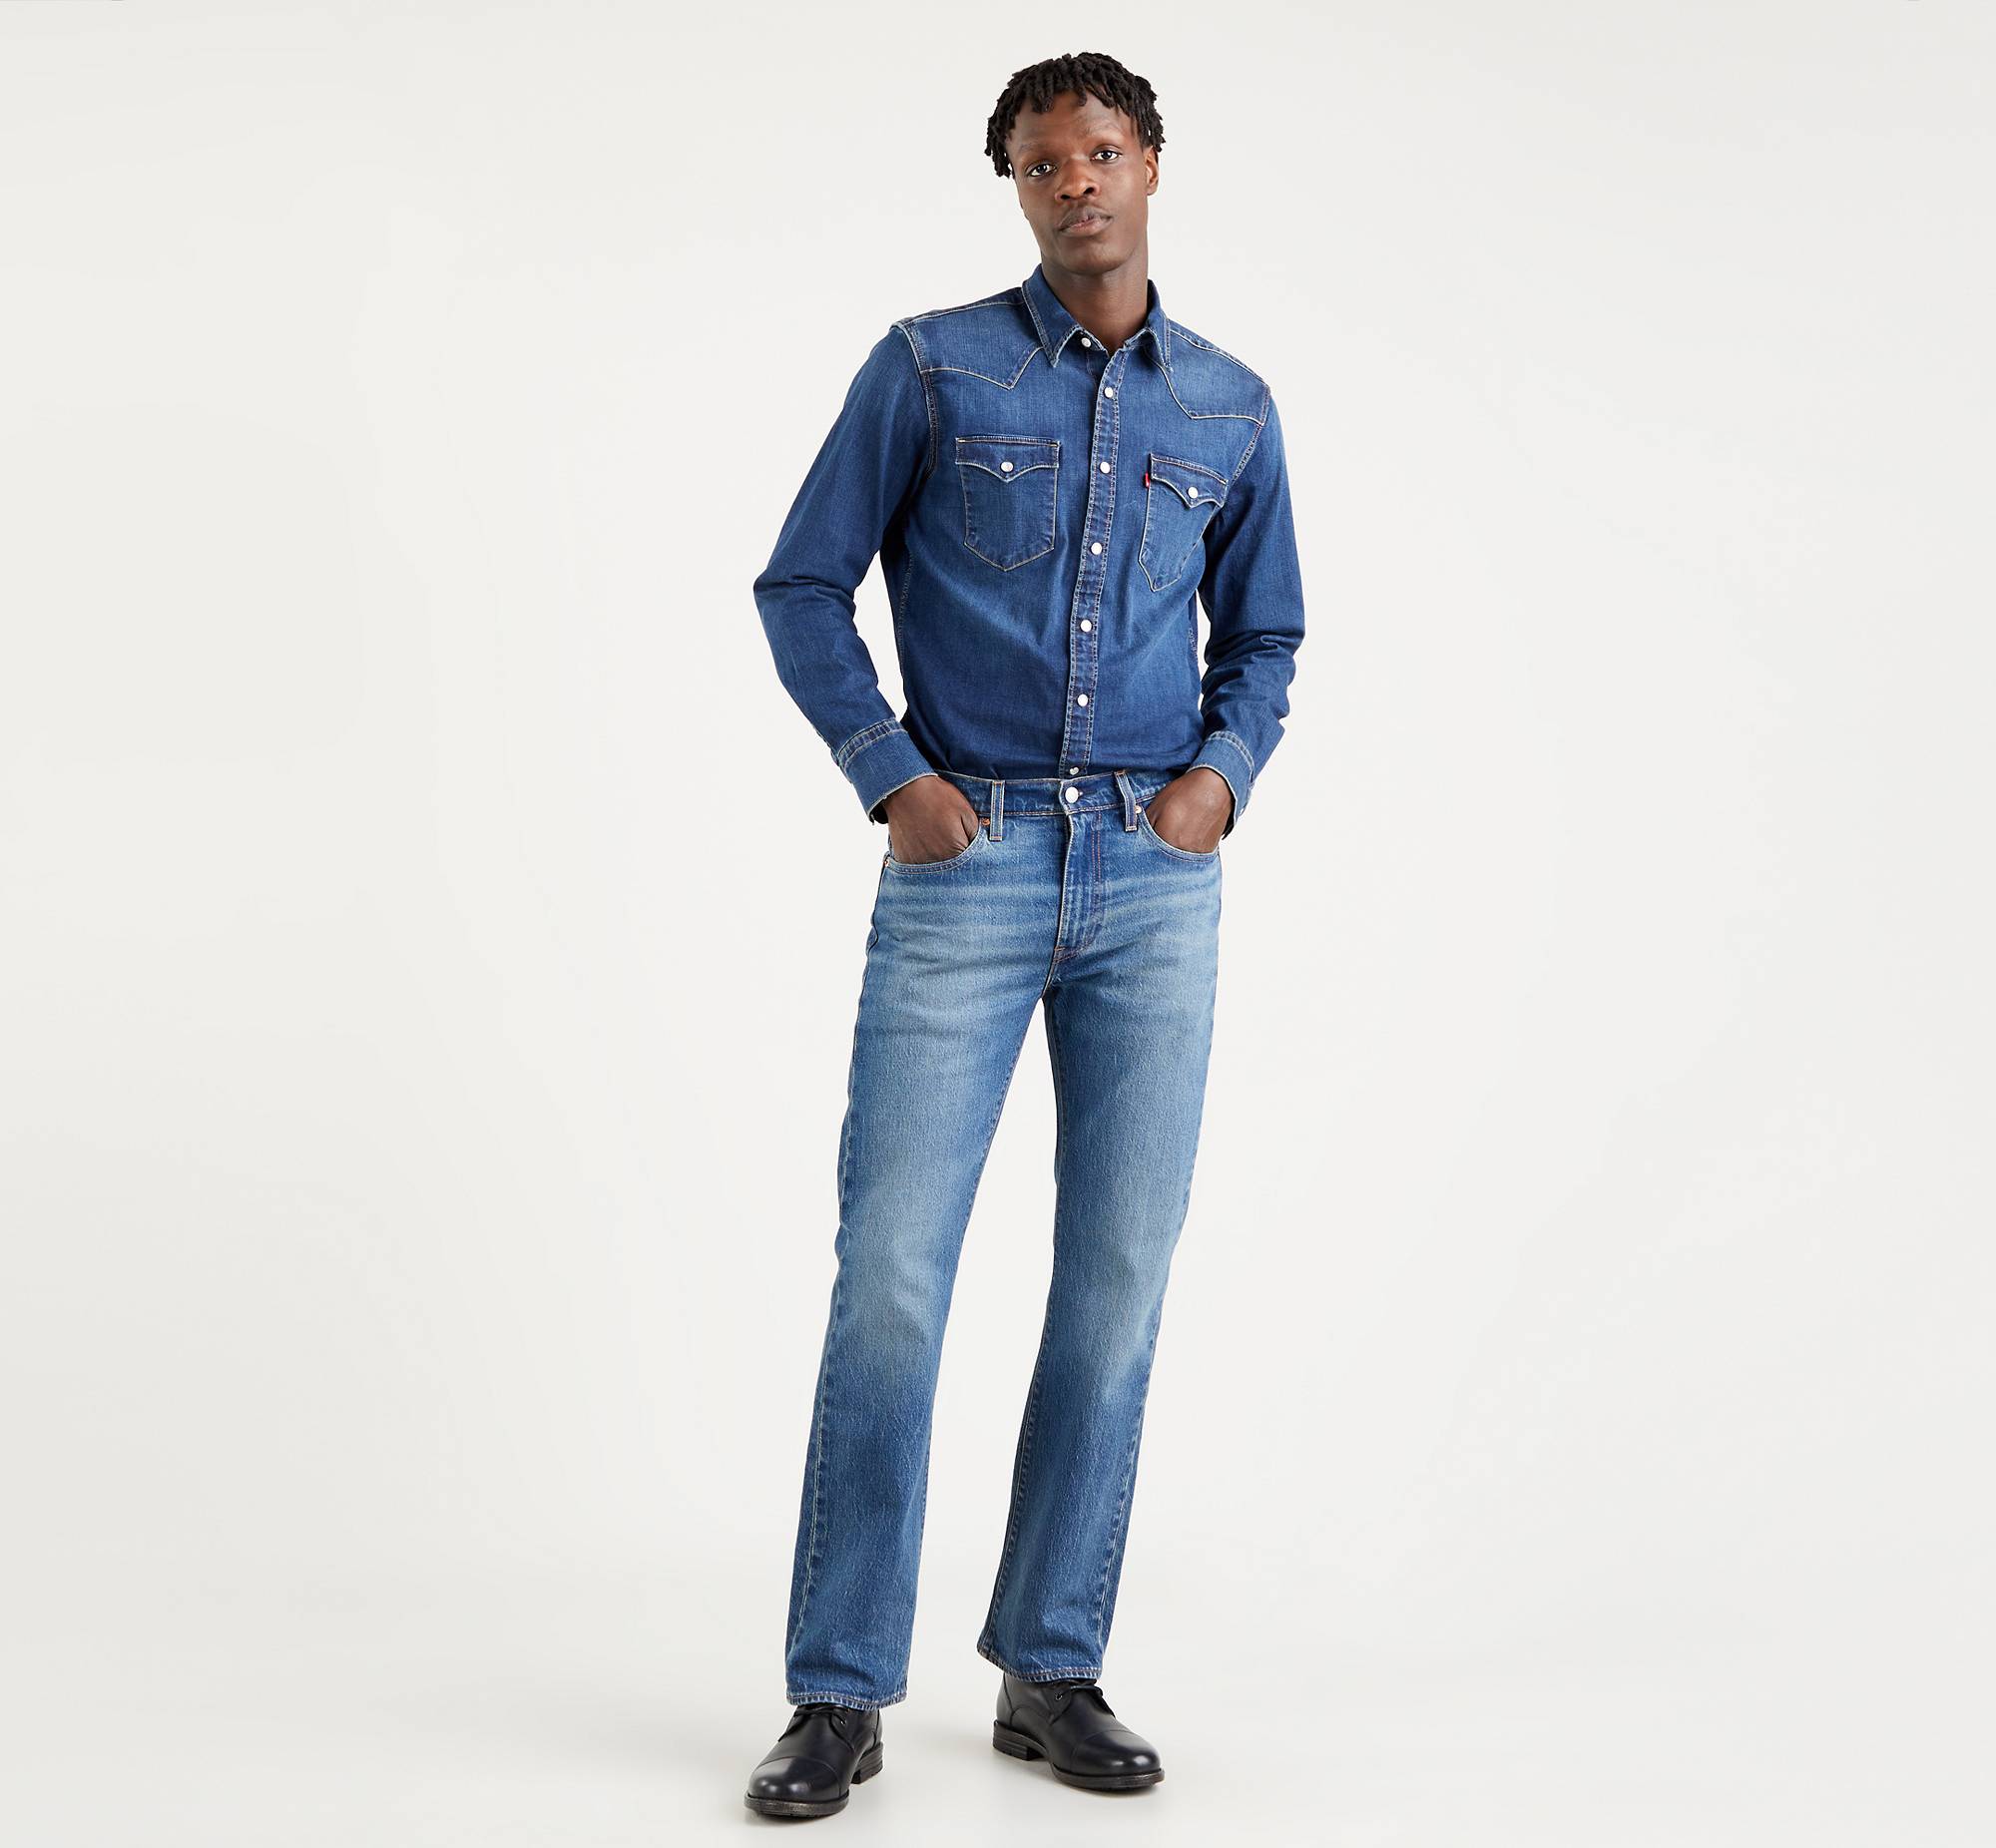 527™ Slim Bootcut Jeans 5